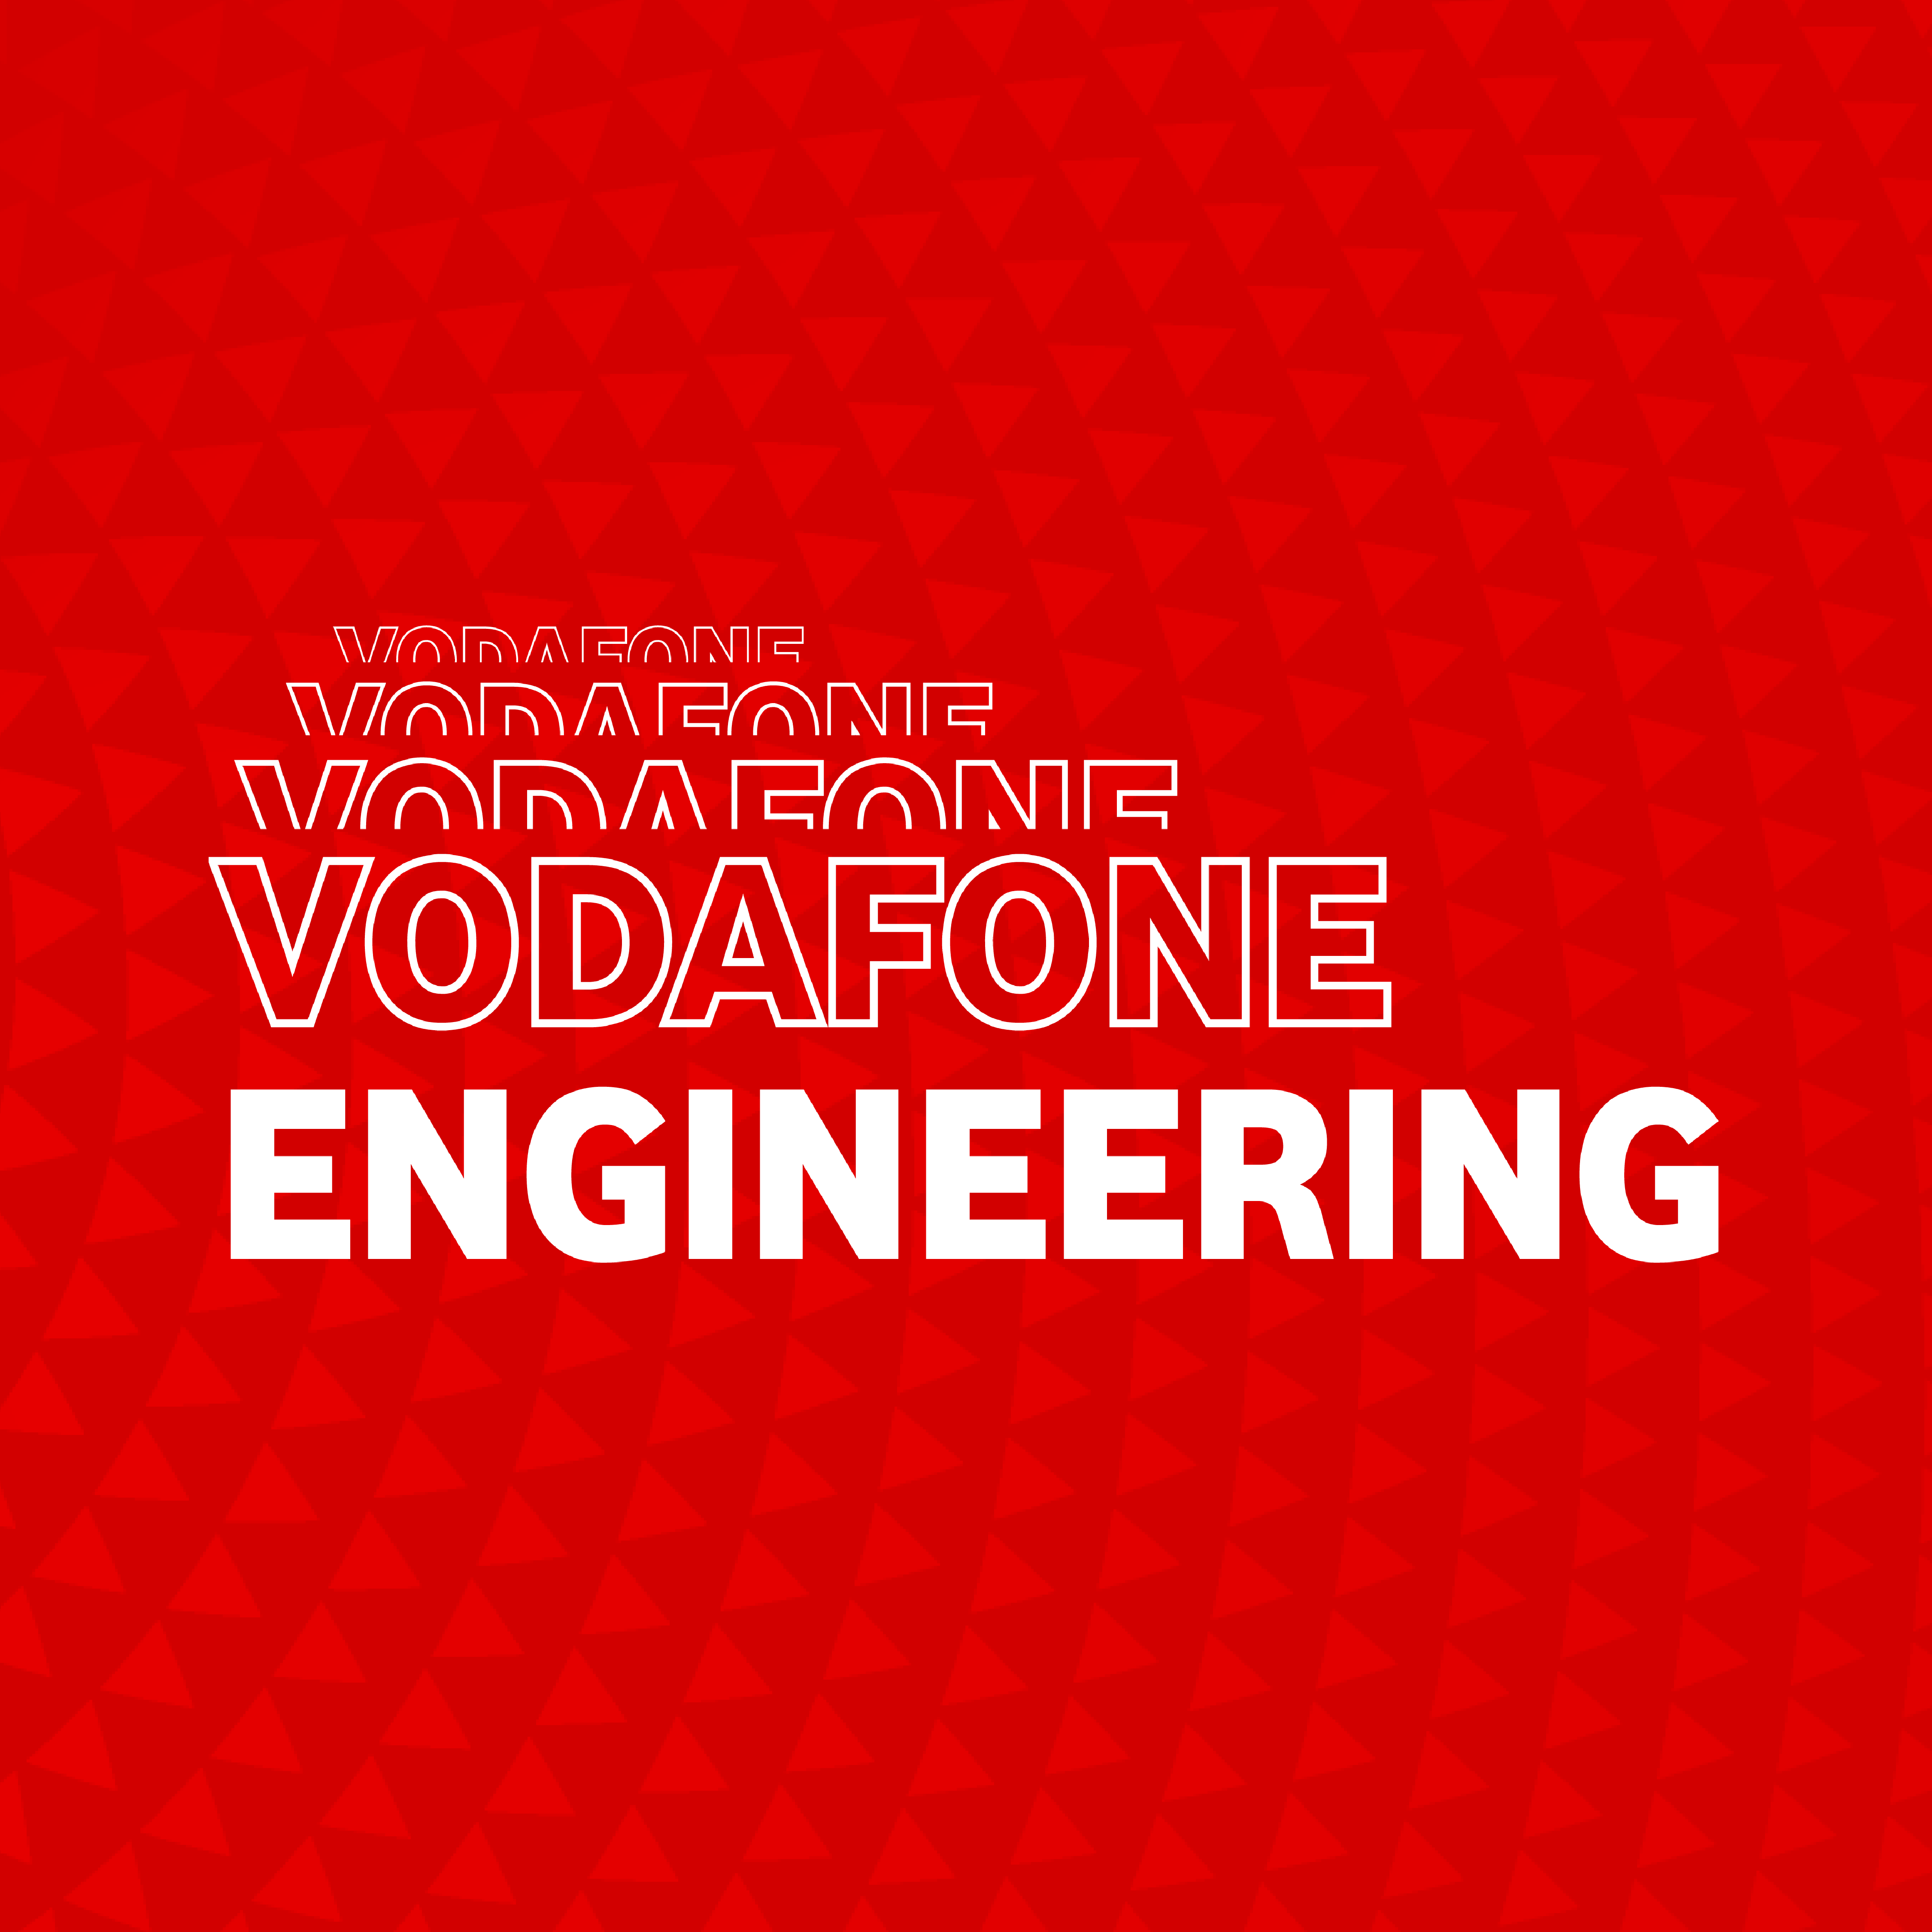 Vodafone Engineering